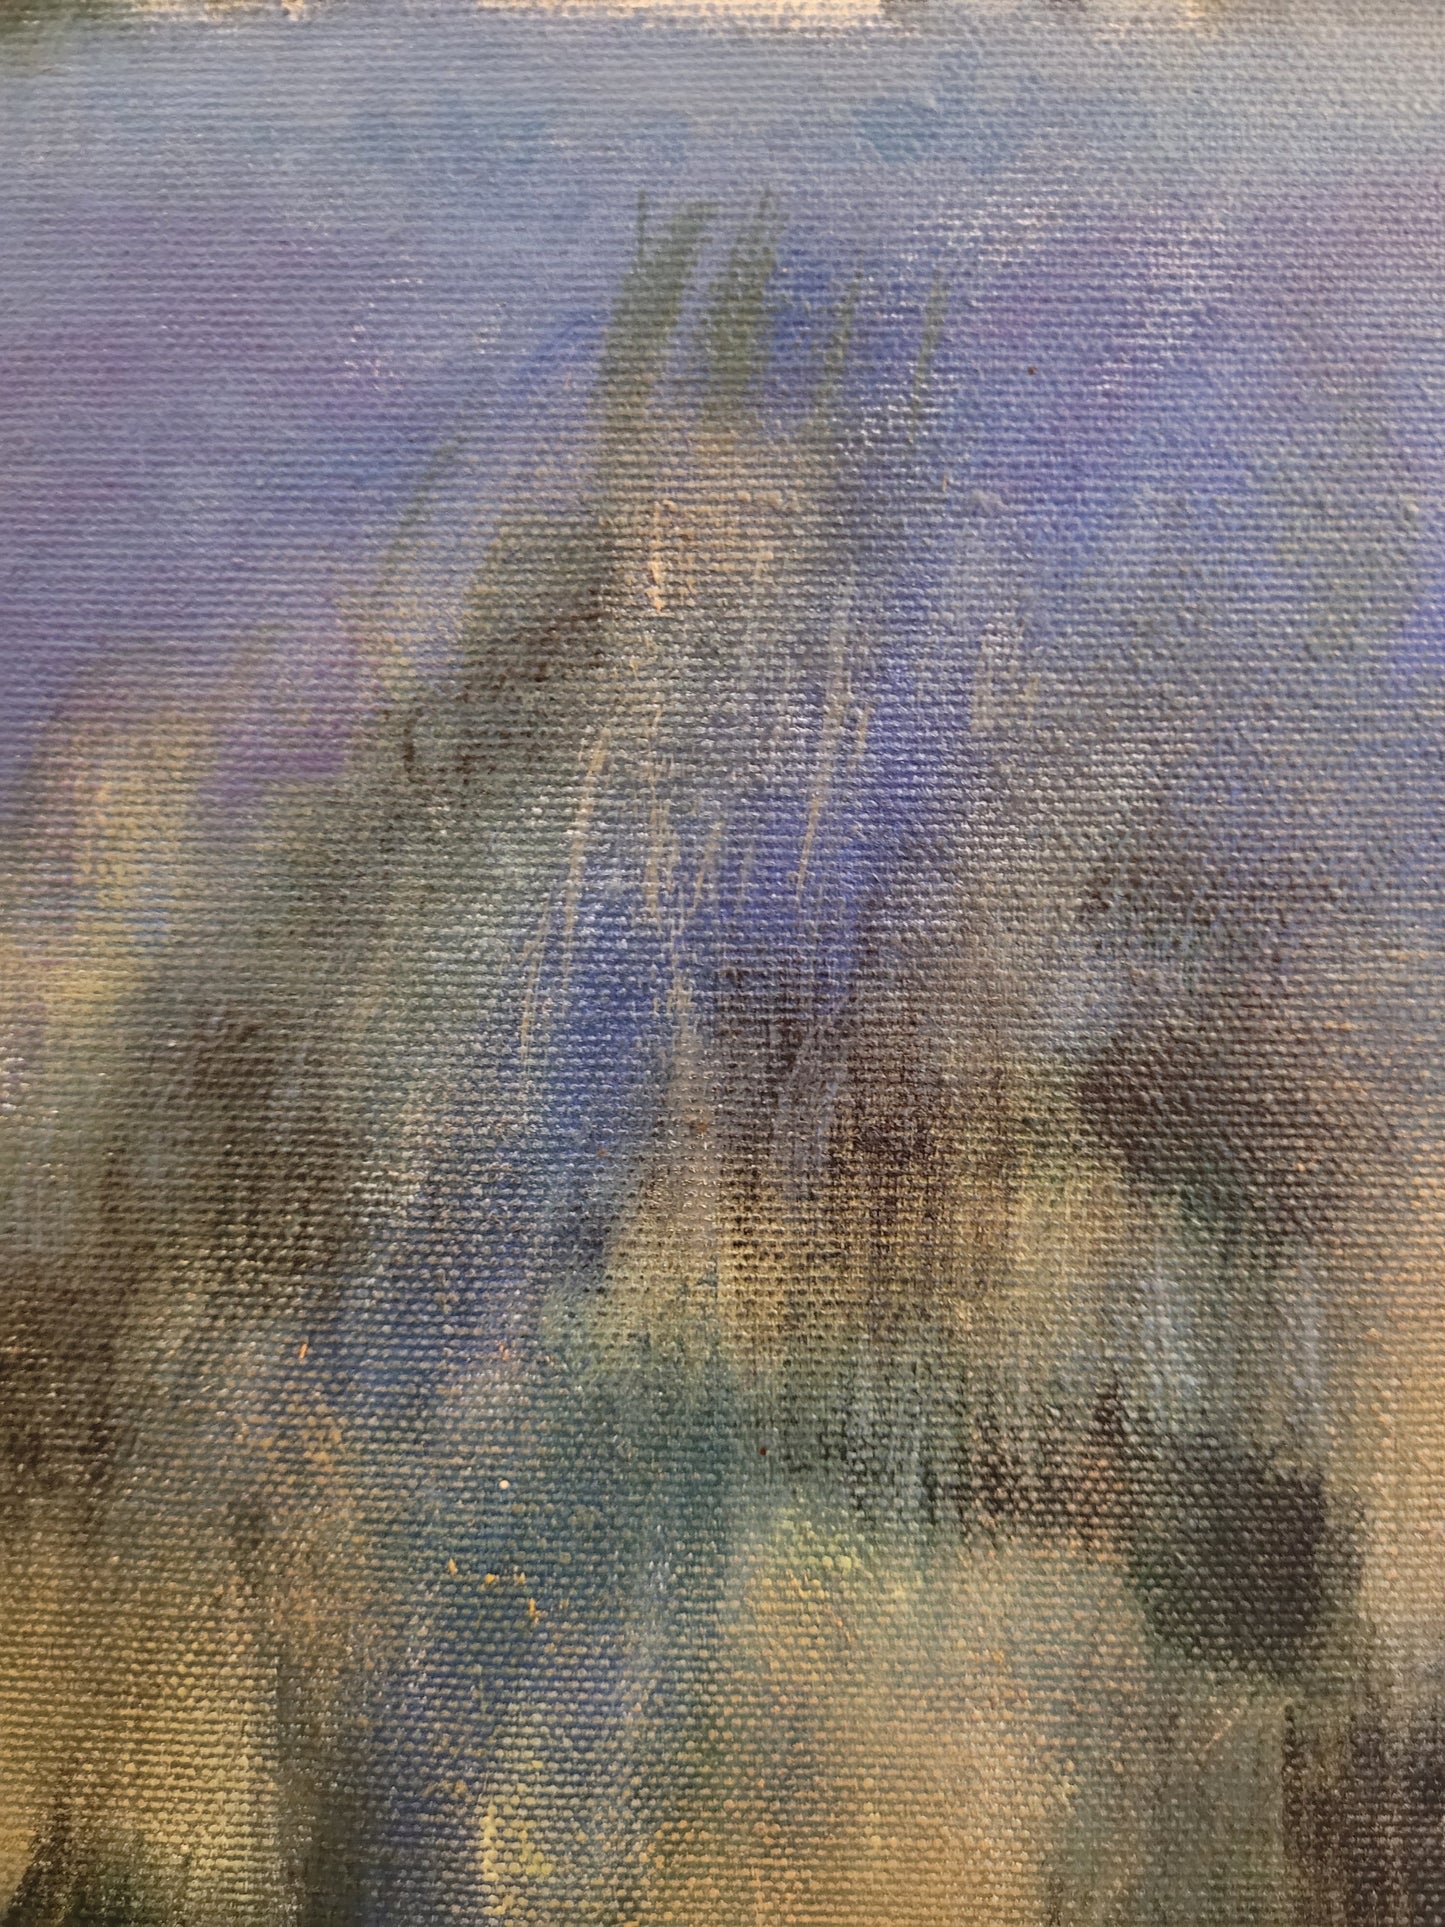 Horst Dengler (geb. 1958) Acrylmalerei Gemälde Impression Lavendelfelder